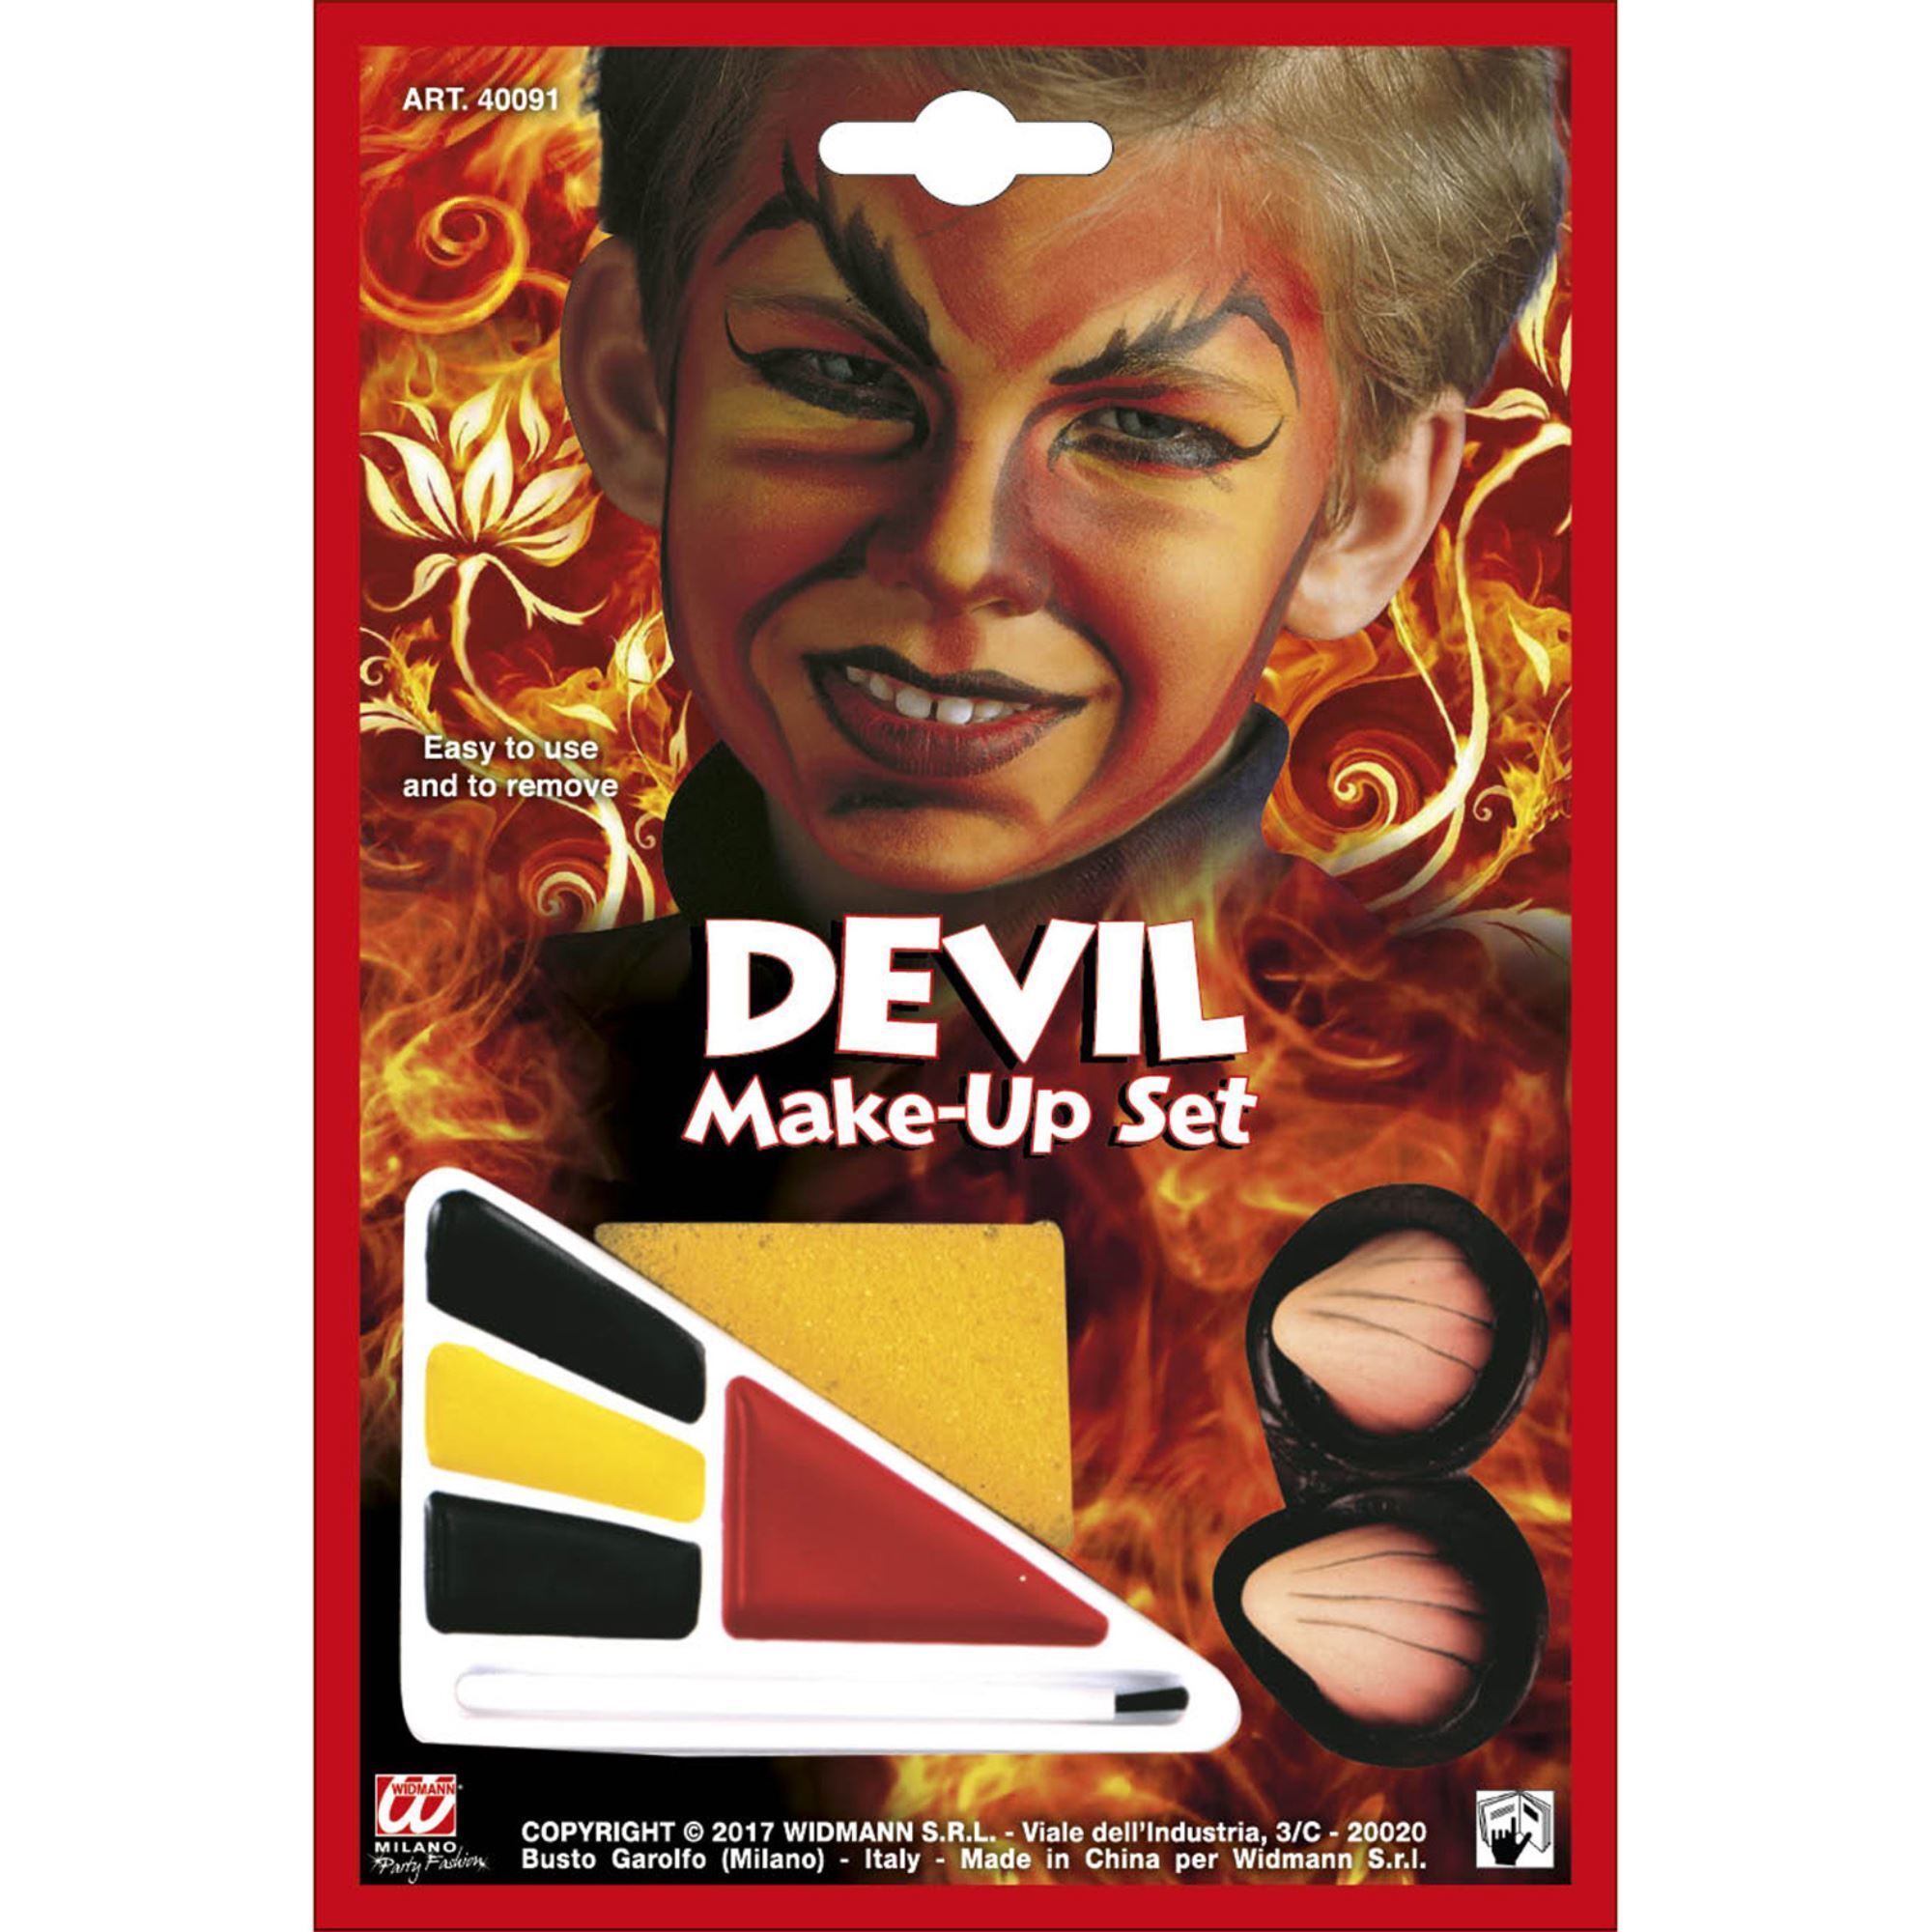 Duivel make-up set